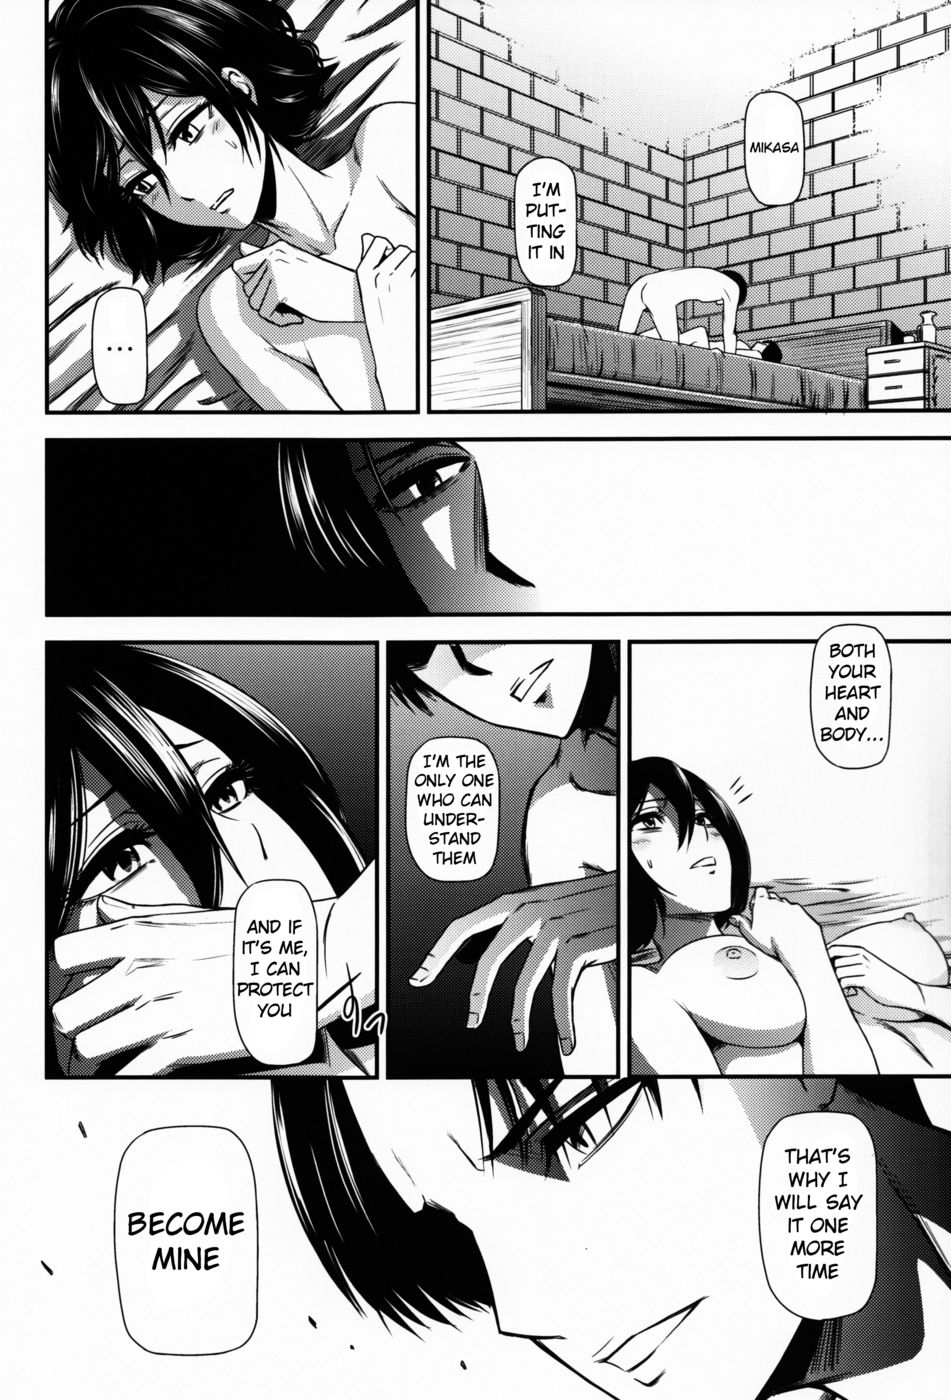 Hentai Manga Comic-Firing Pin 3-Read-23